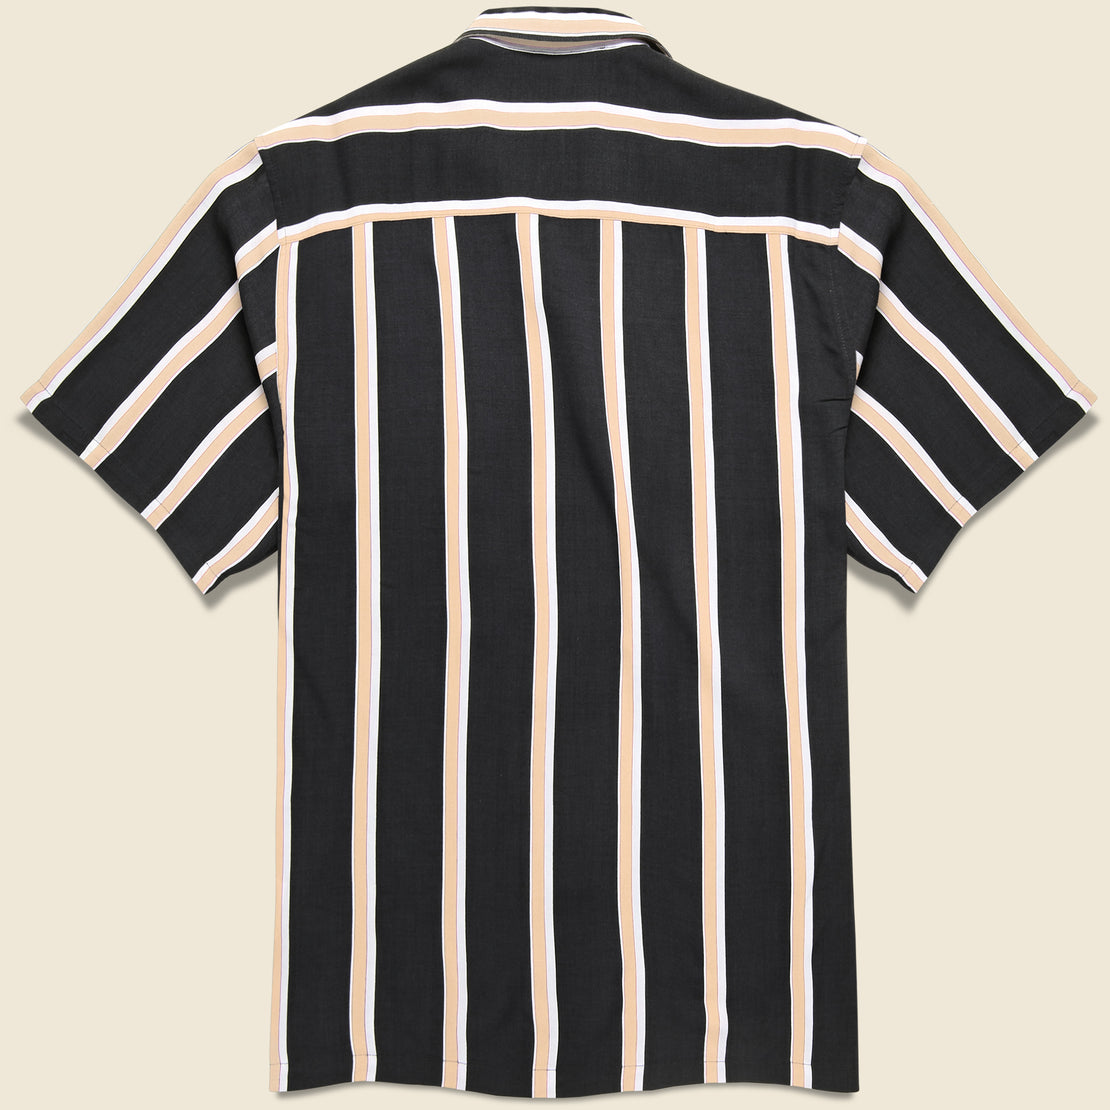 Gelder Stripe Camp Shirt - Black - Carhartt WIP - STAG Provisions - Tops - S/S Woven - Stripe